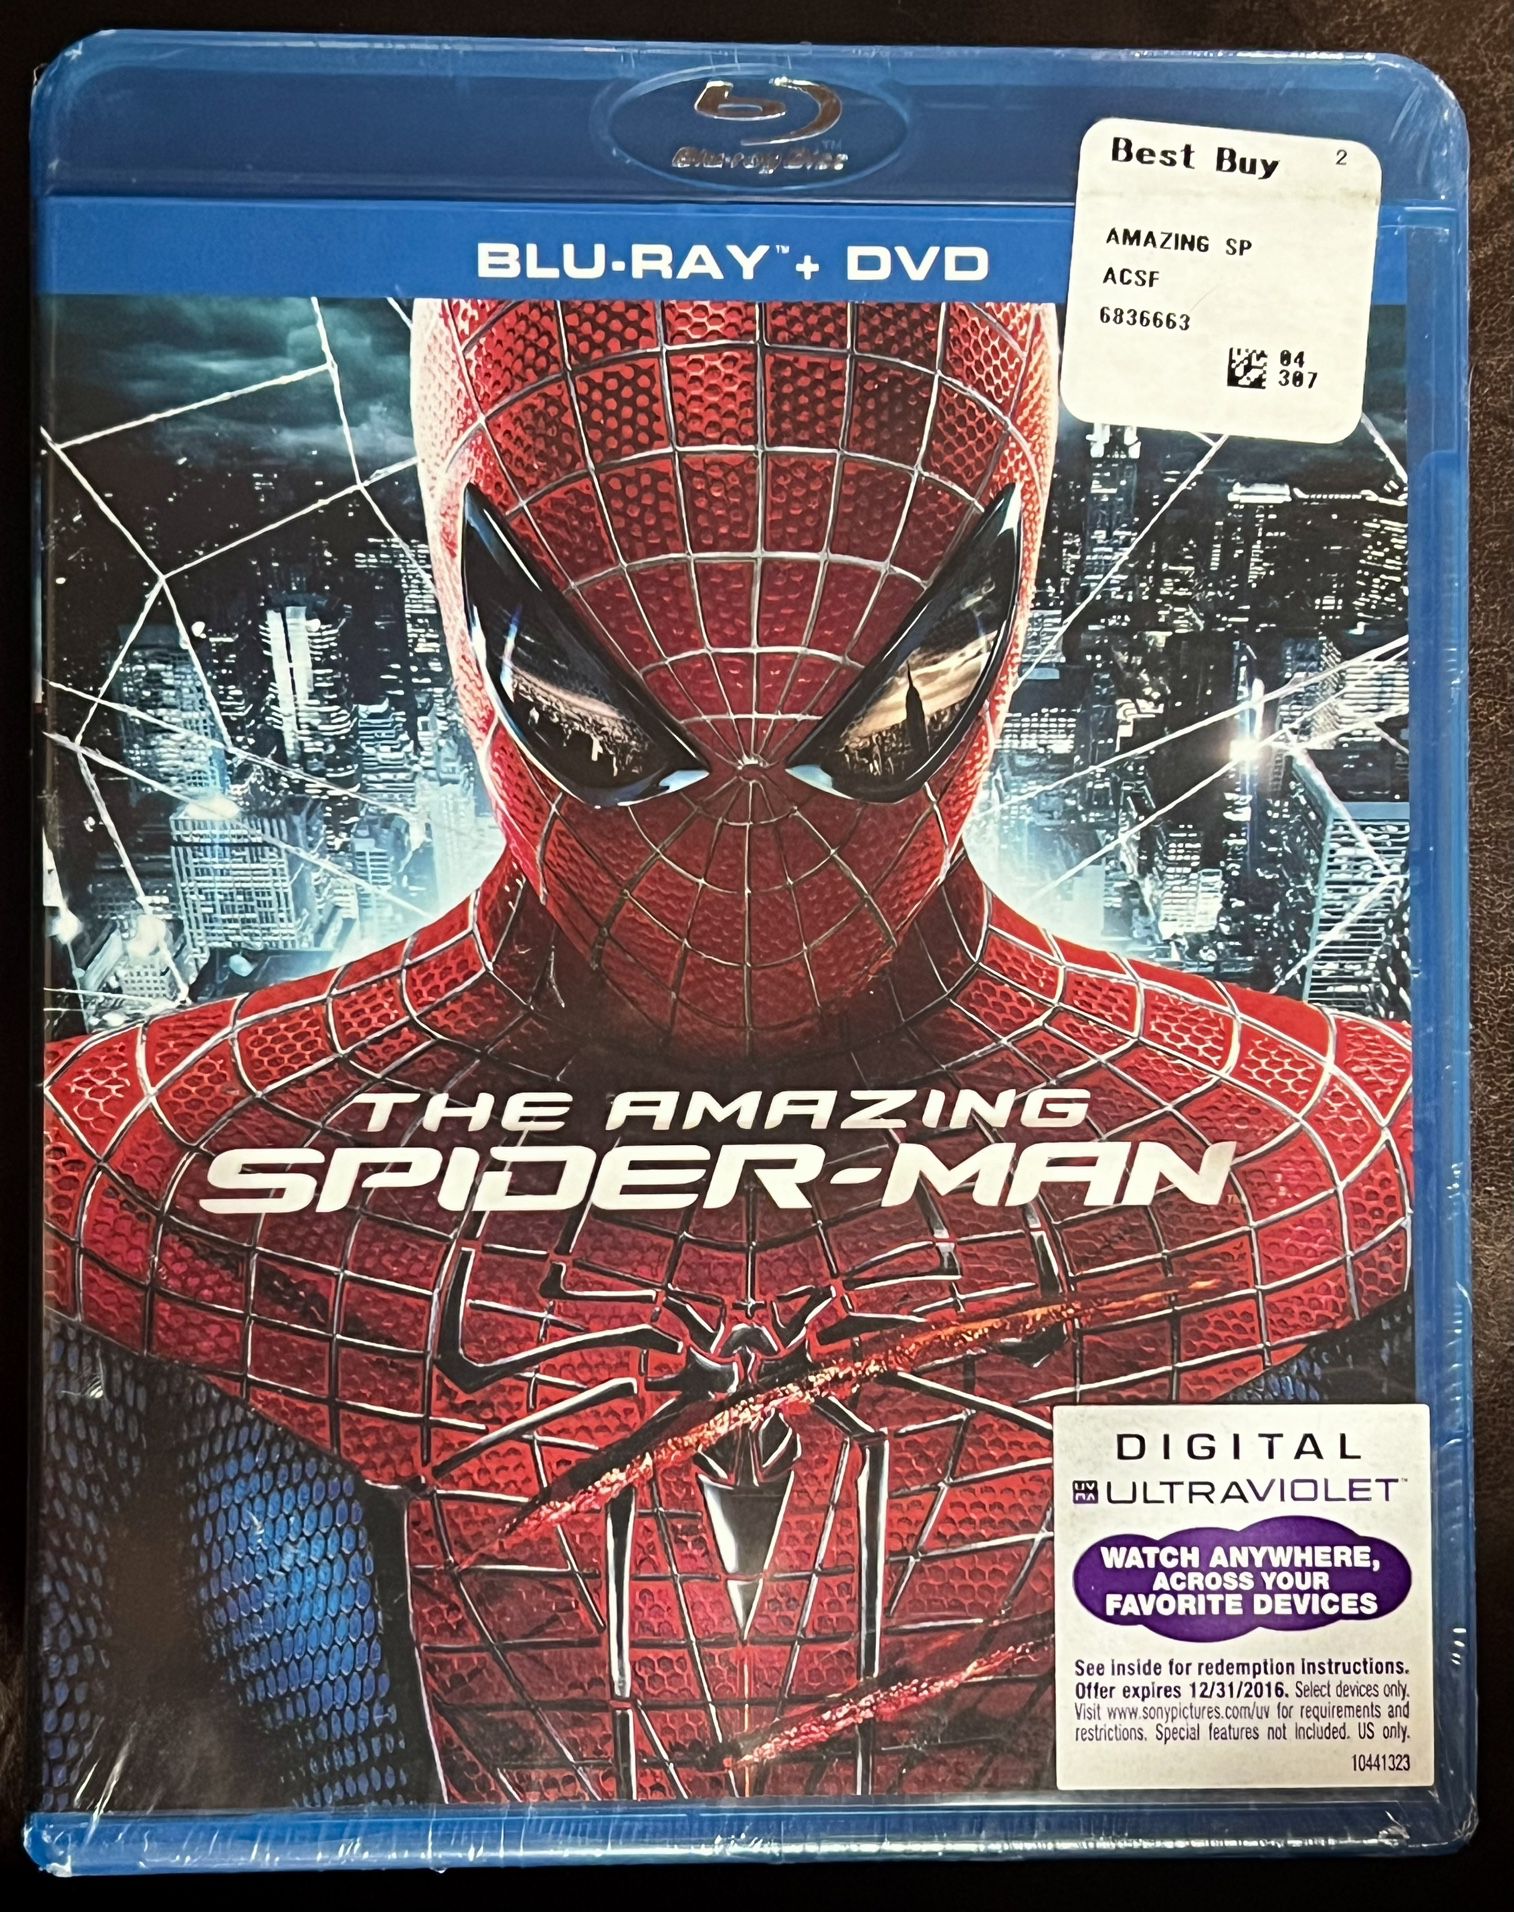 NEW Blu-Ray + DVD “THE AMAZING SPIDER-MAN” Andrew Garfield, Emma Stone